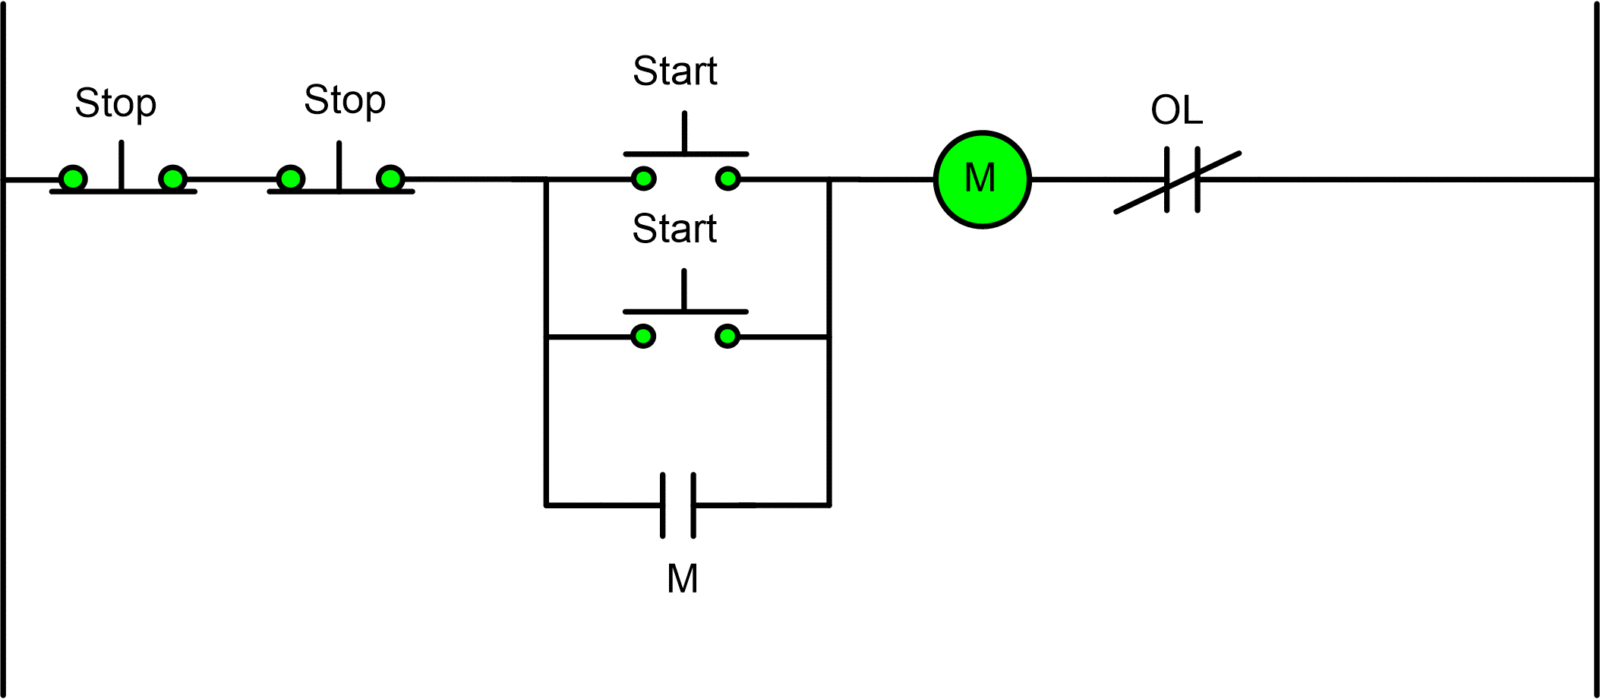 insinkerator start stop reverse control wiring diagram